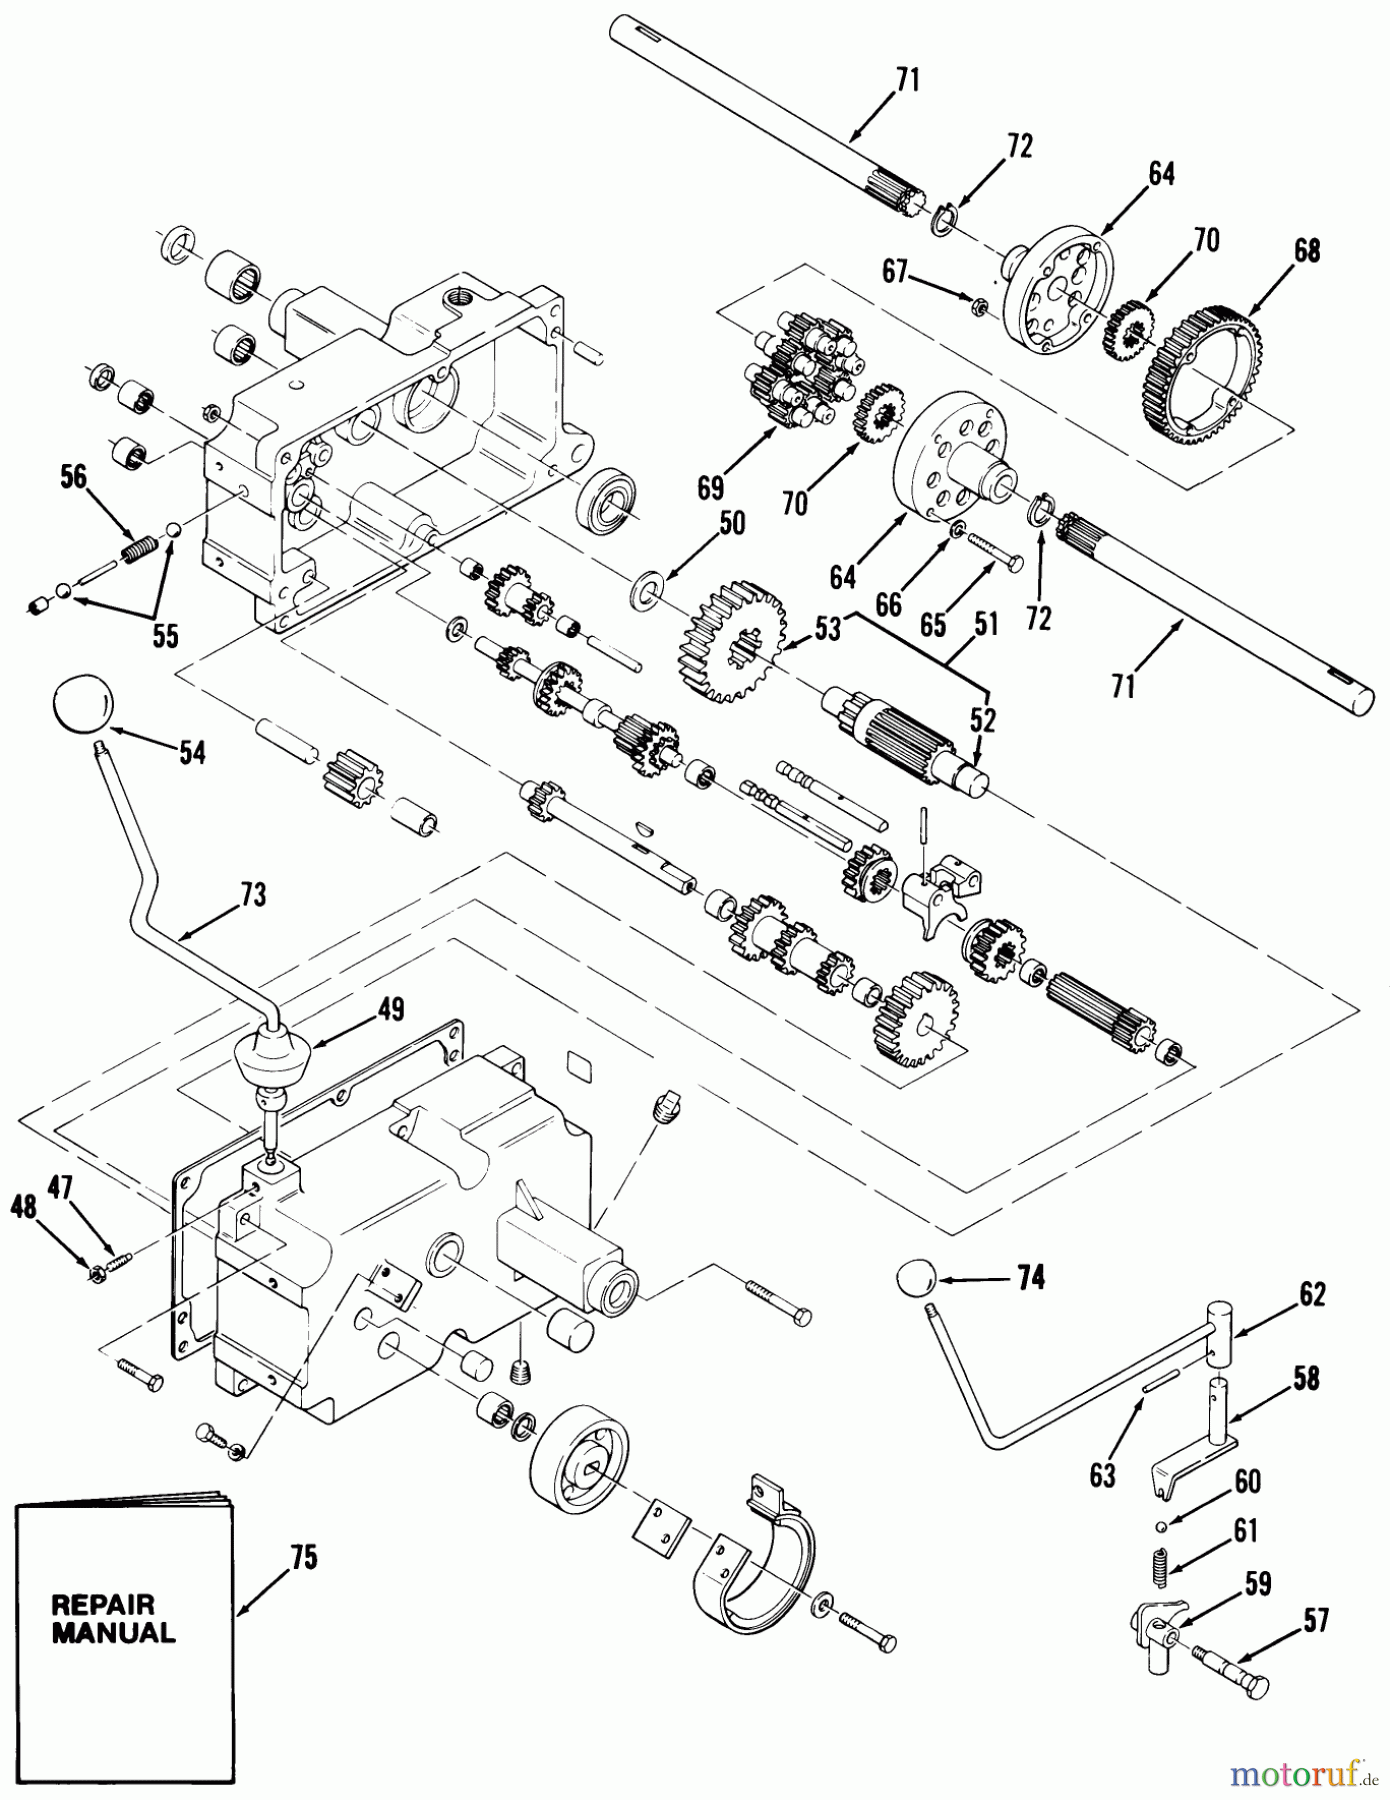  Toro Neu Mowers, Lawn & Garden Tractor Seite 1 01-17KE02 (C-175) - Toro C-175 Twin Automatic Tractor, 1982 MECHANICAL TRANSMISSION-8 SPEED (CONT-D)